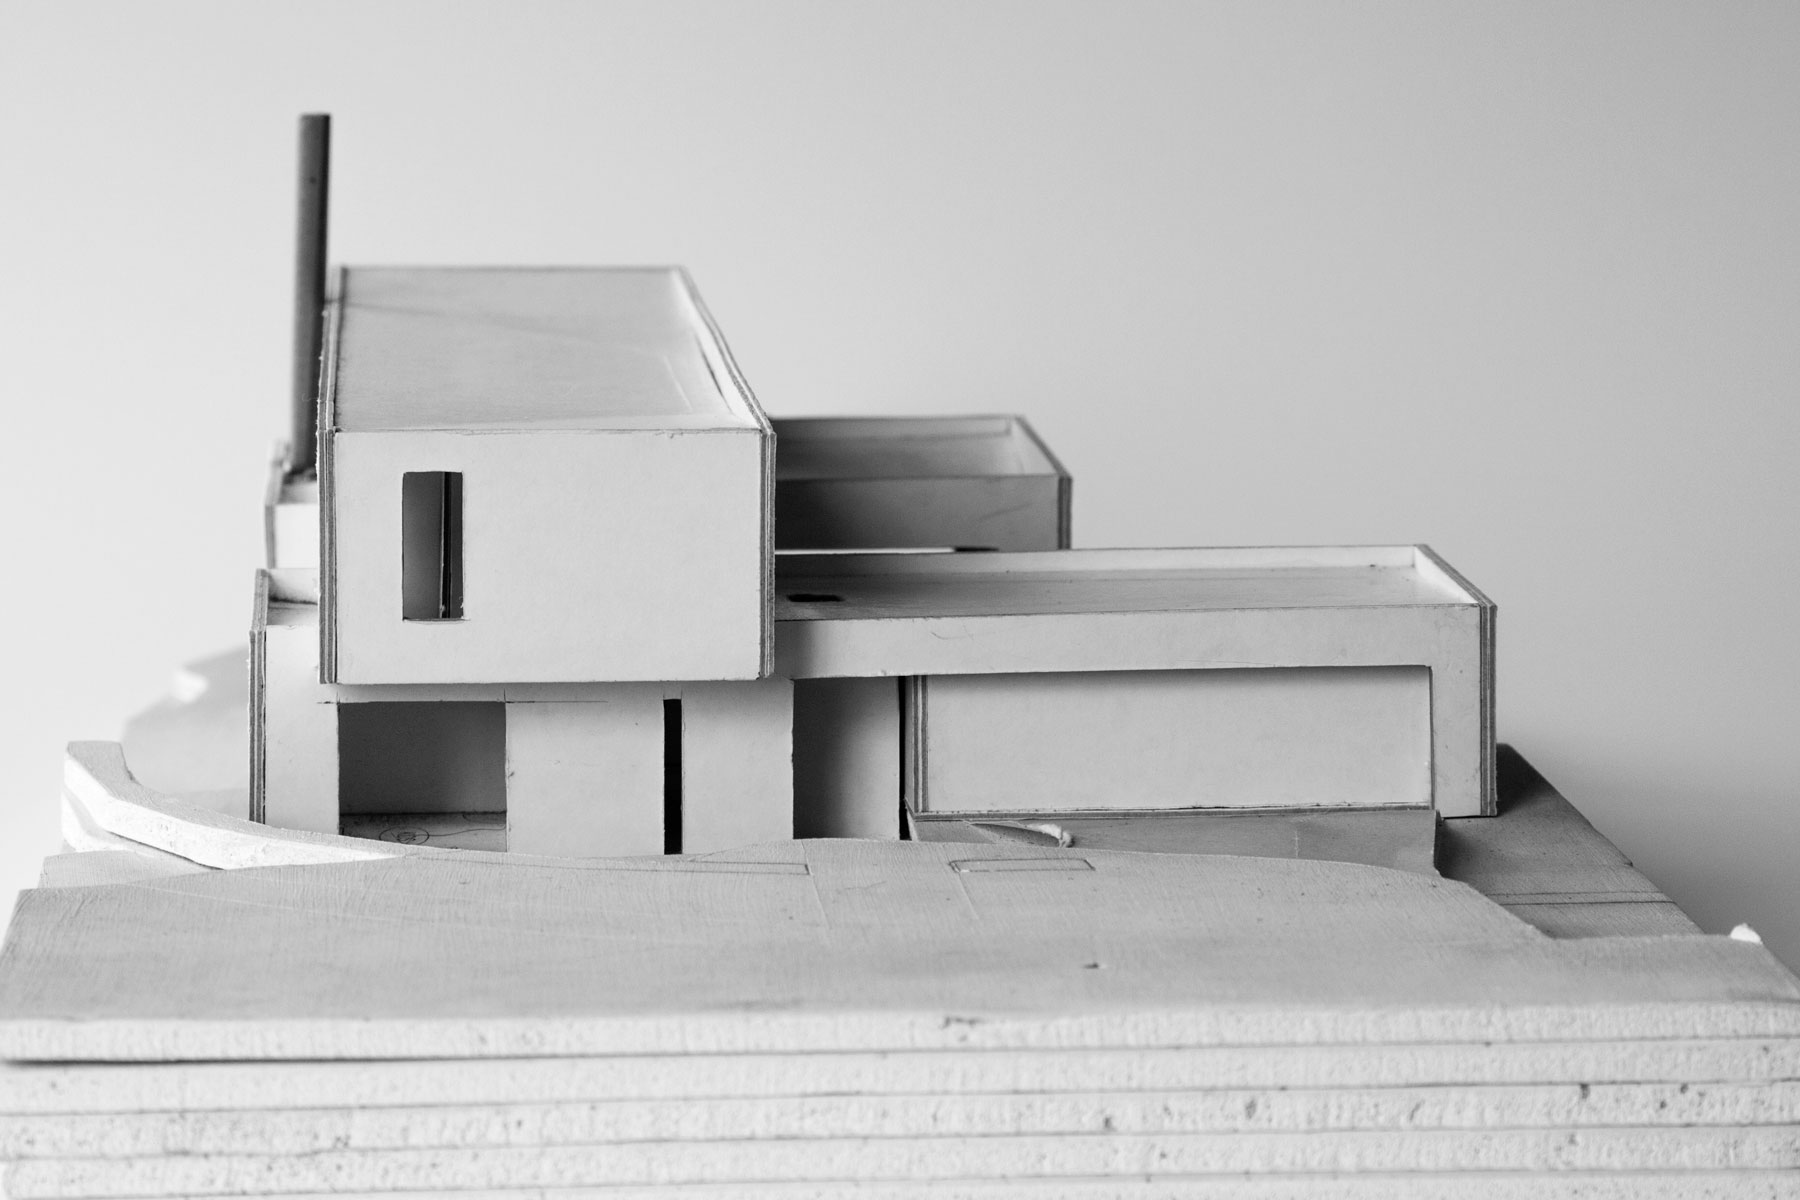 M Leuschke Kahn Architects Models IMG_5449.jpg